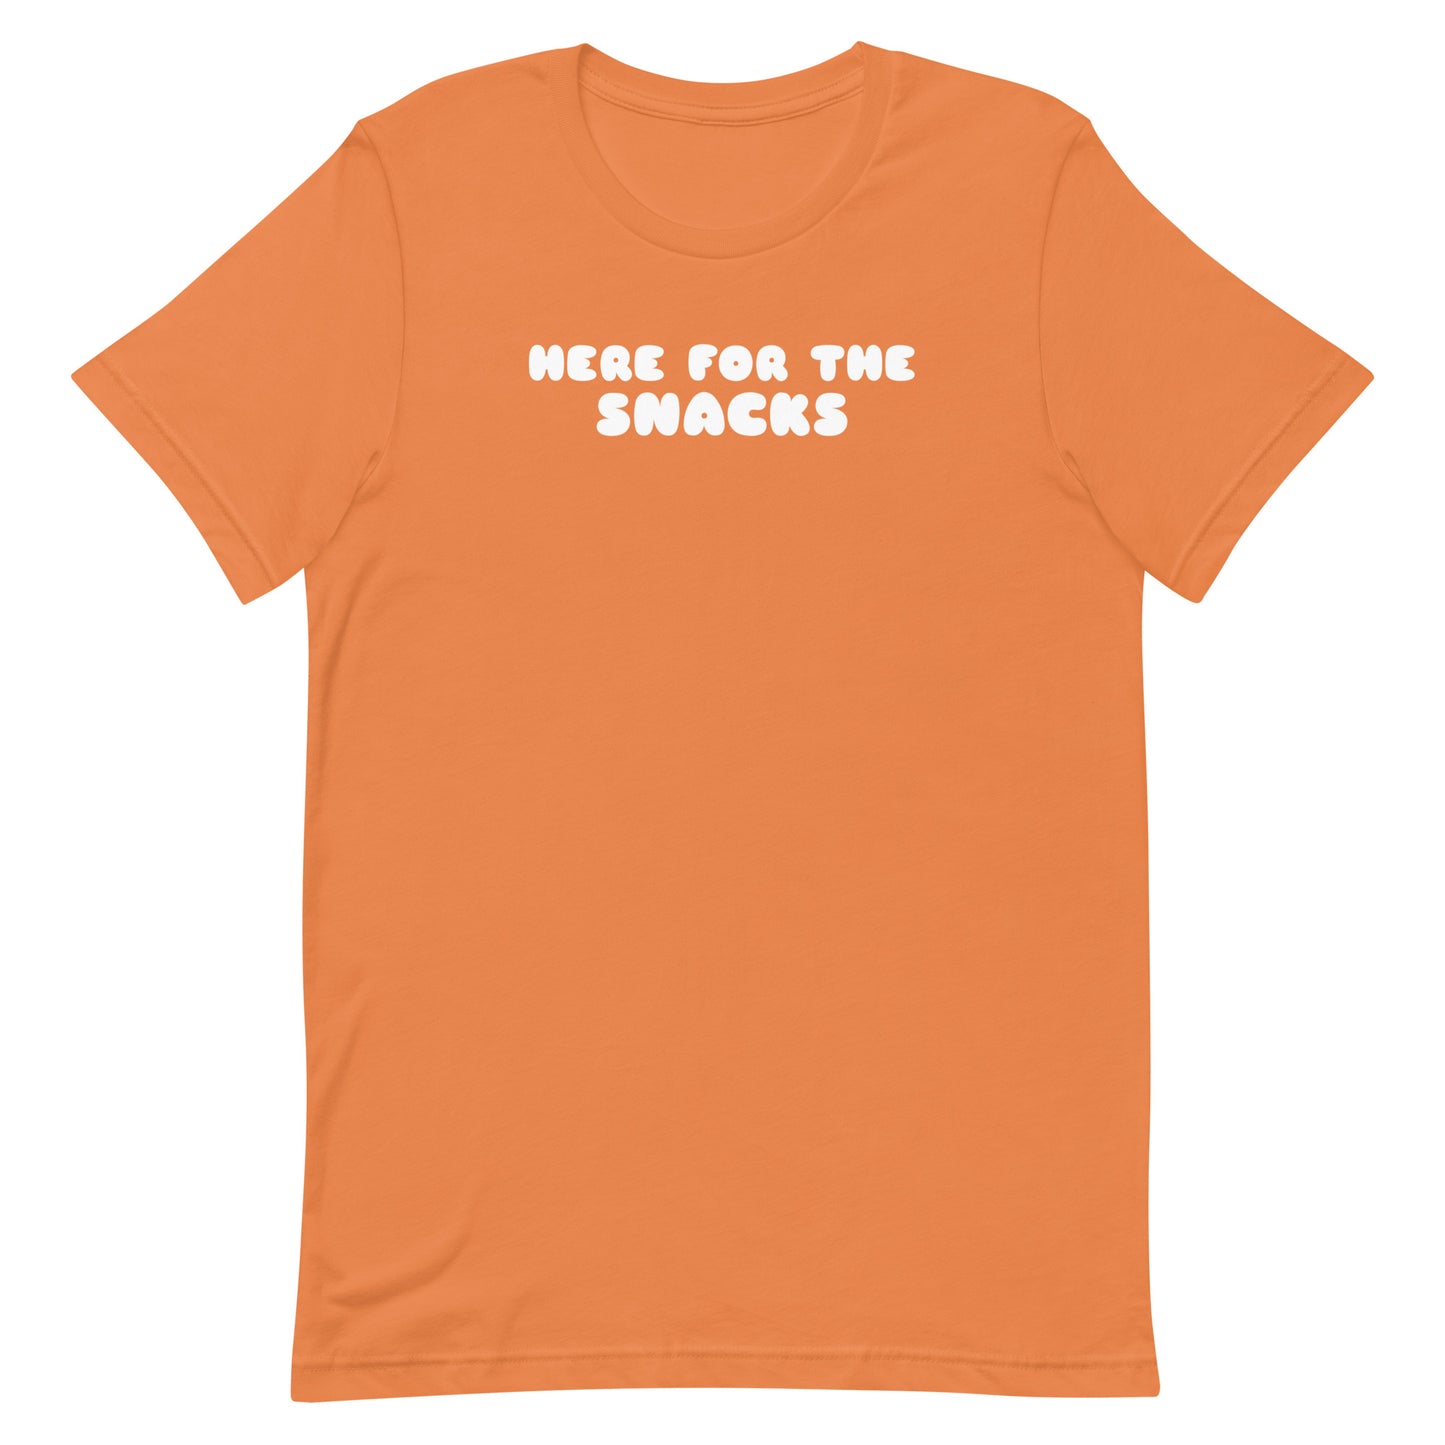 "Here for the snacks" shirt in orange